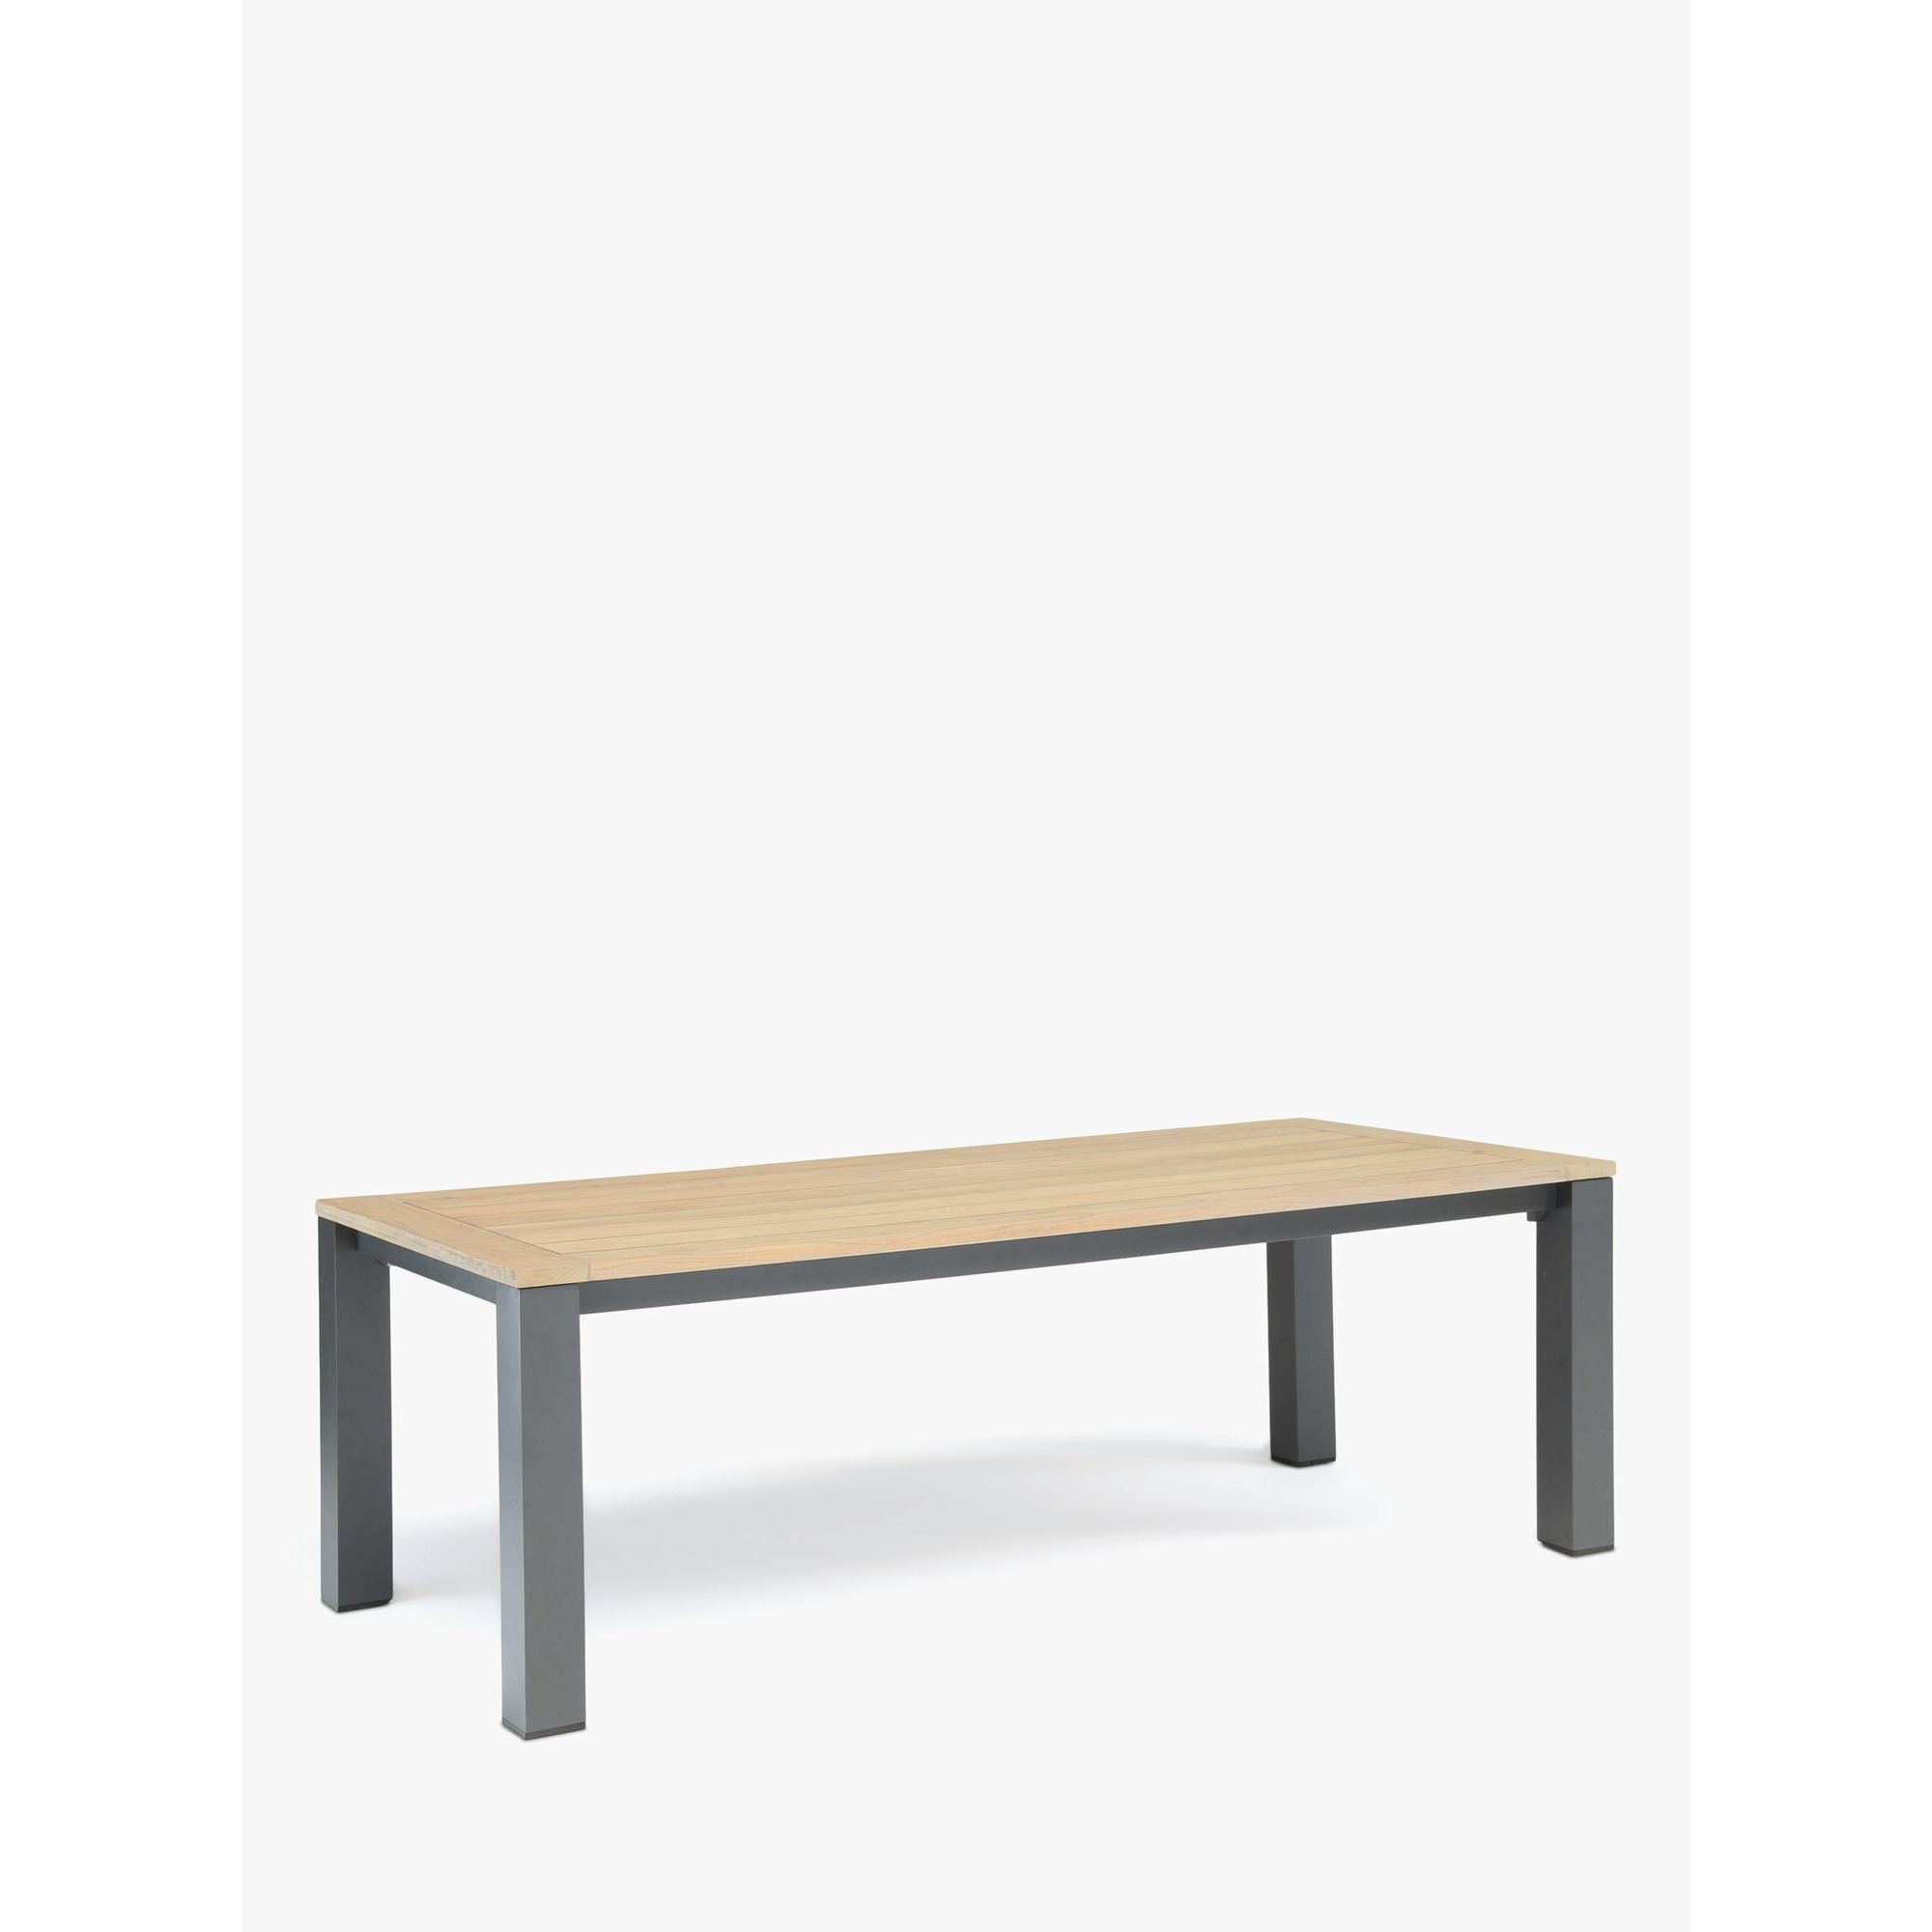 KETTLER Elba Rectangular Garden Dining Table, FSC-Certified (Teak Wood), 220cm, Grey/Natural - image 1